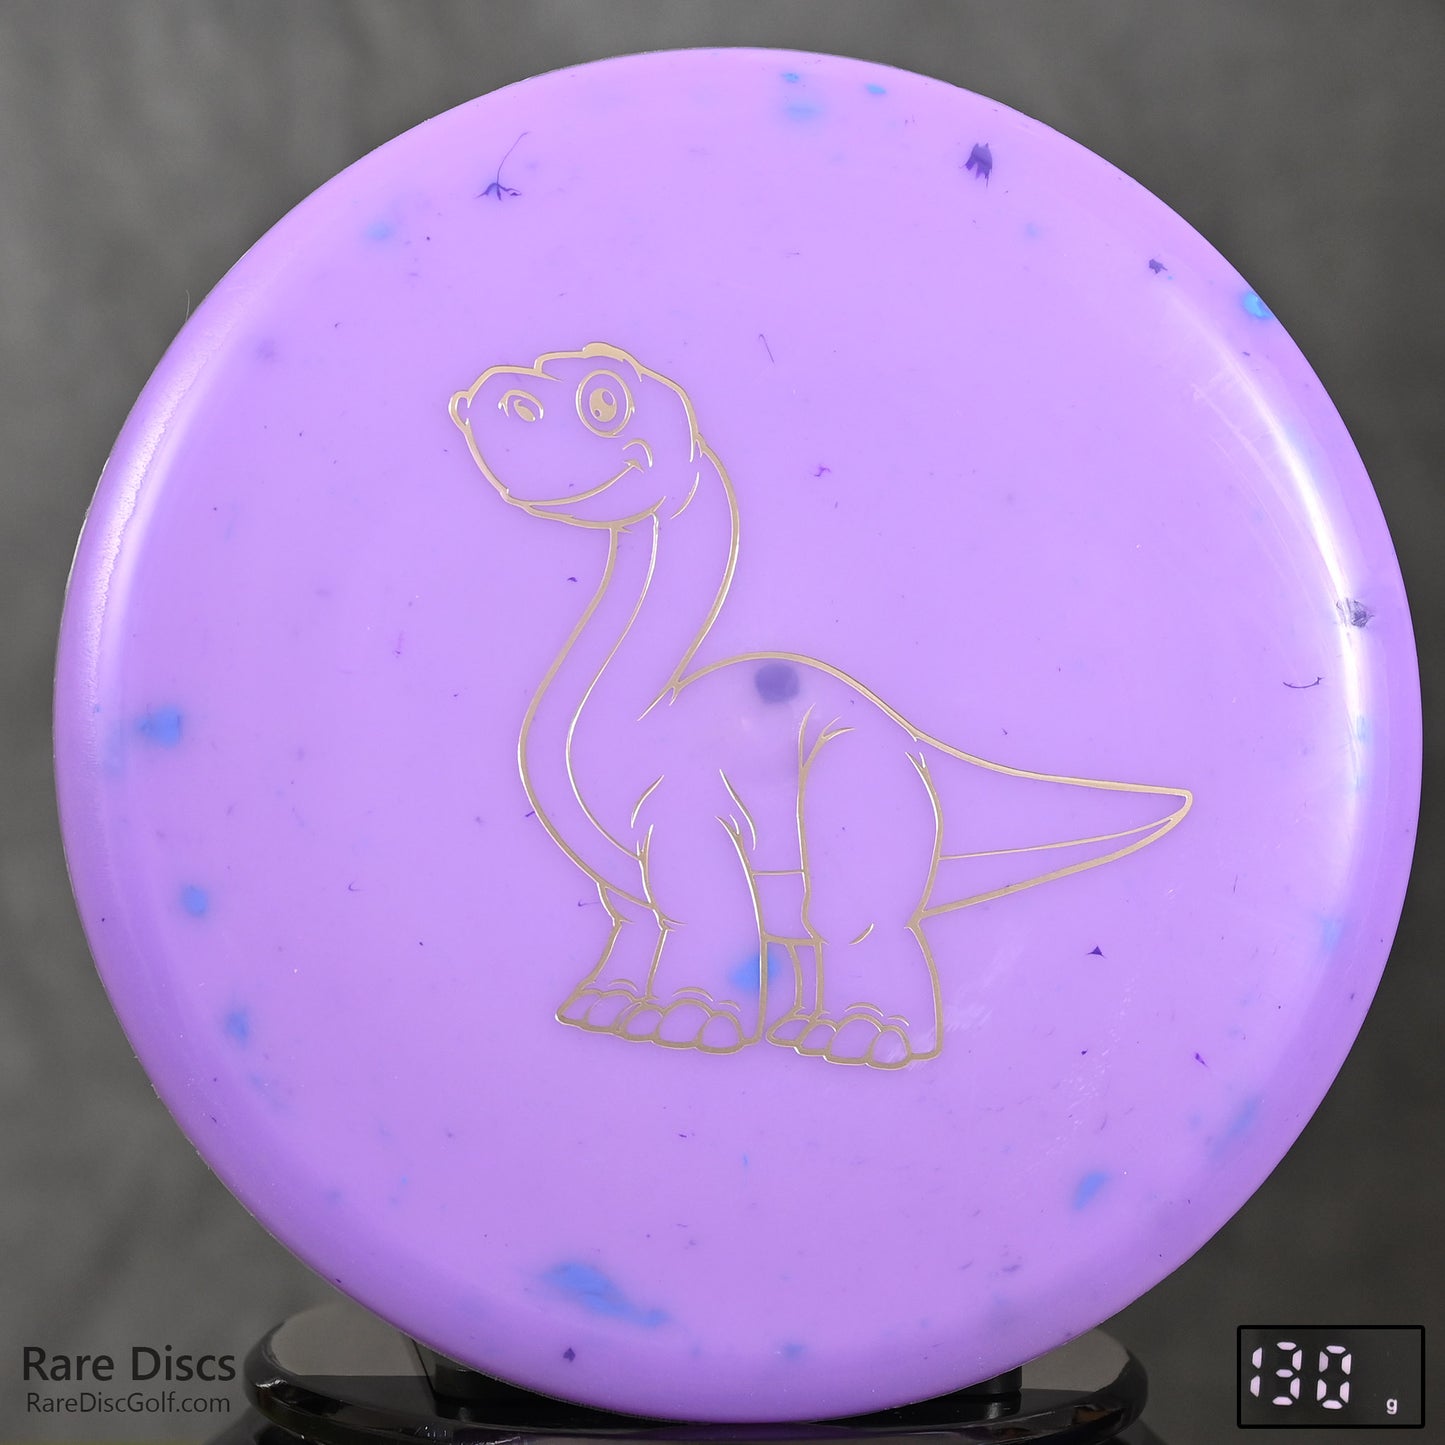 Dino Discs Brachiosaurus - Eggshell